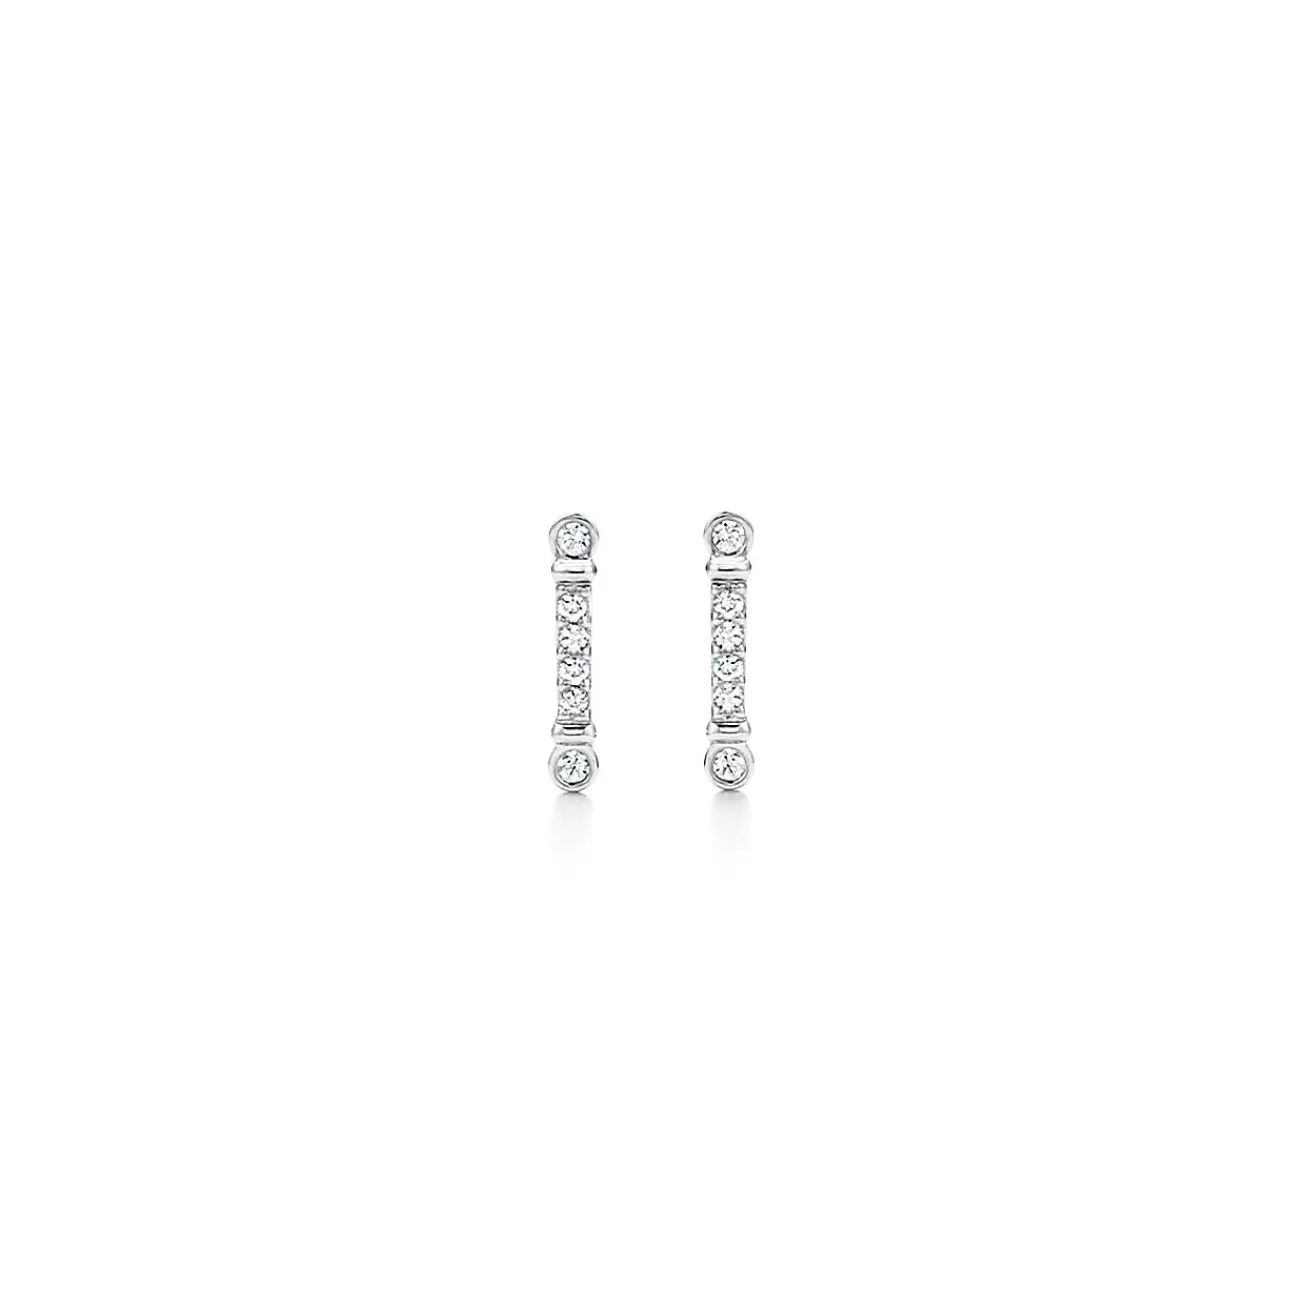 Tiffany & Co. Tiffany Fleur de Lis key bar earrings in platinum with diamonds. | ^ Earrings | Gifts for Her